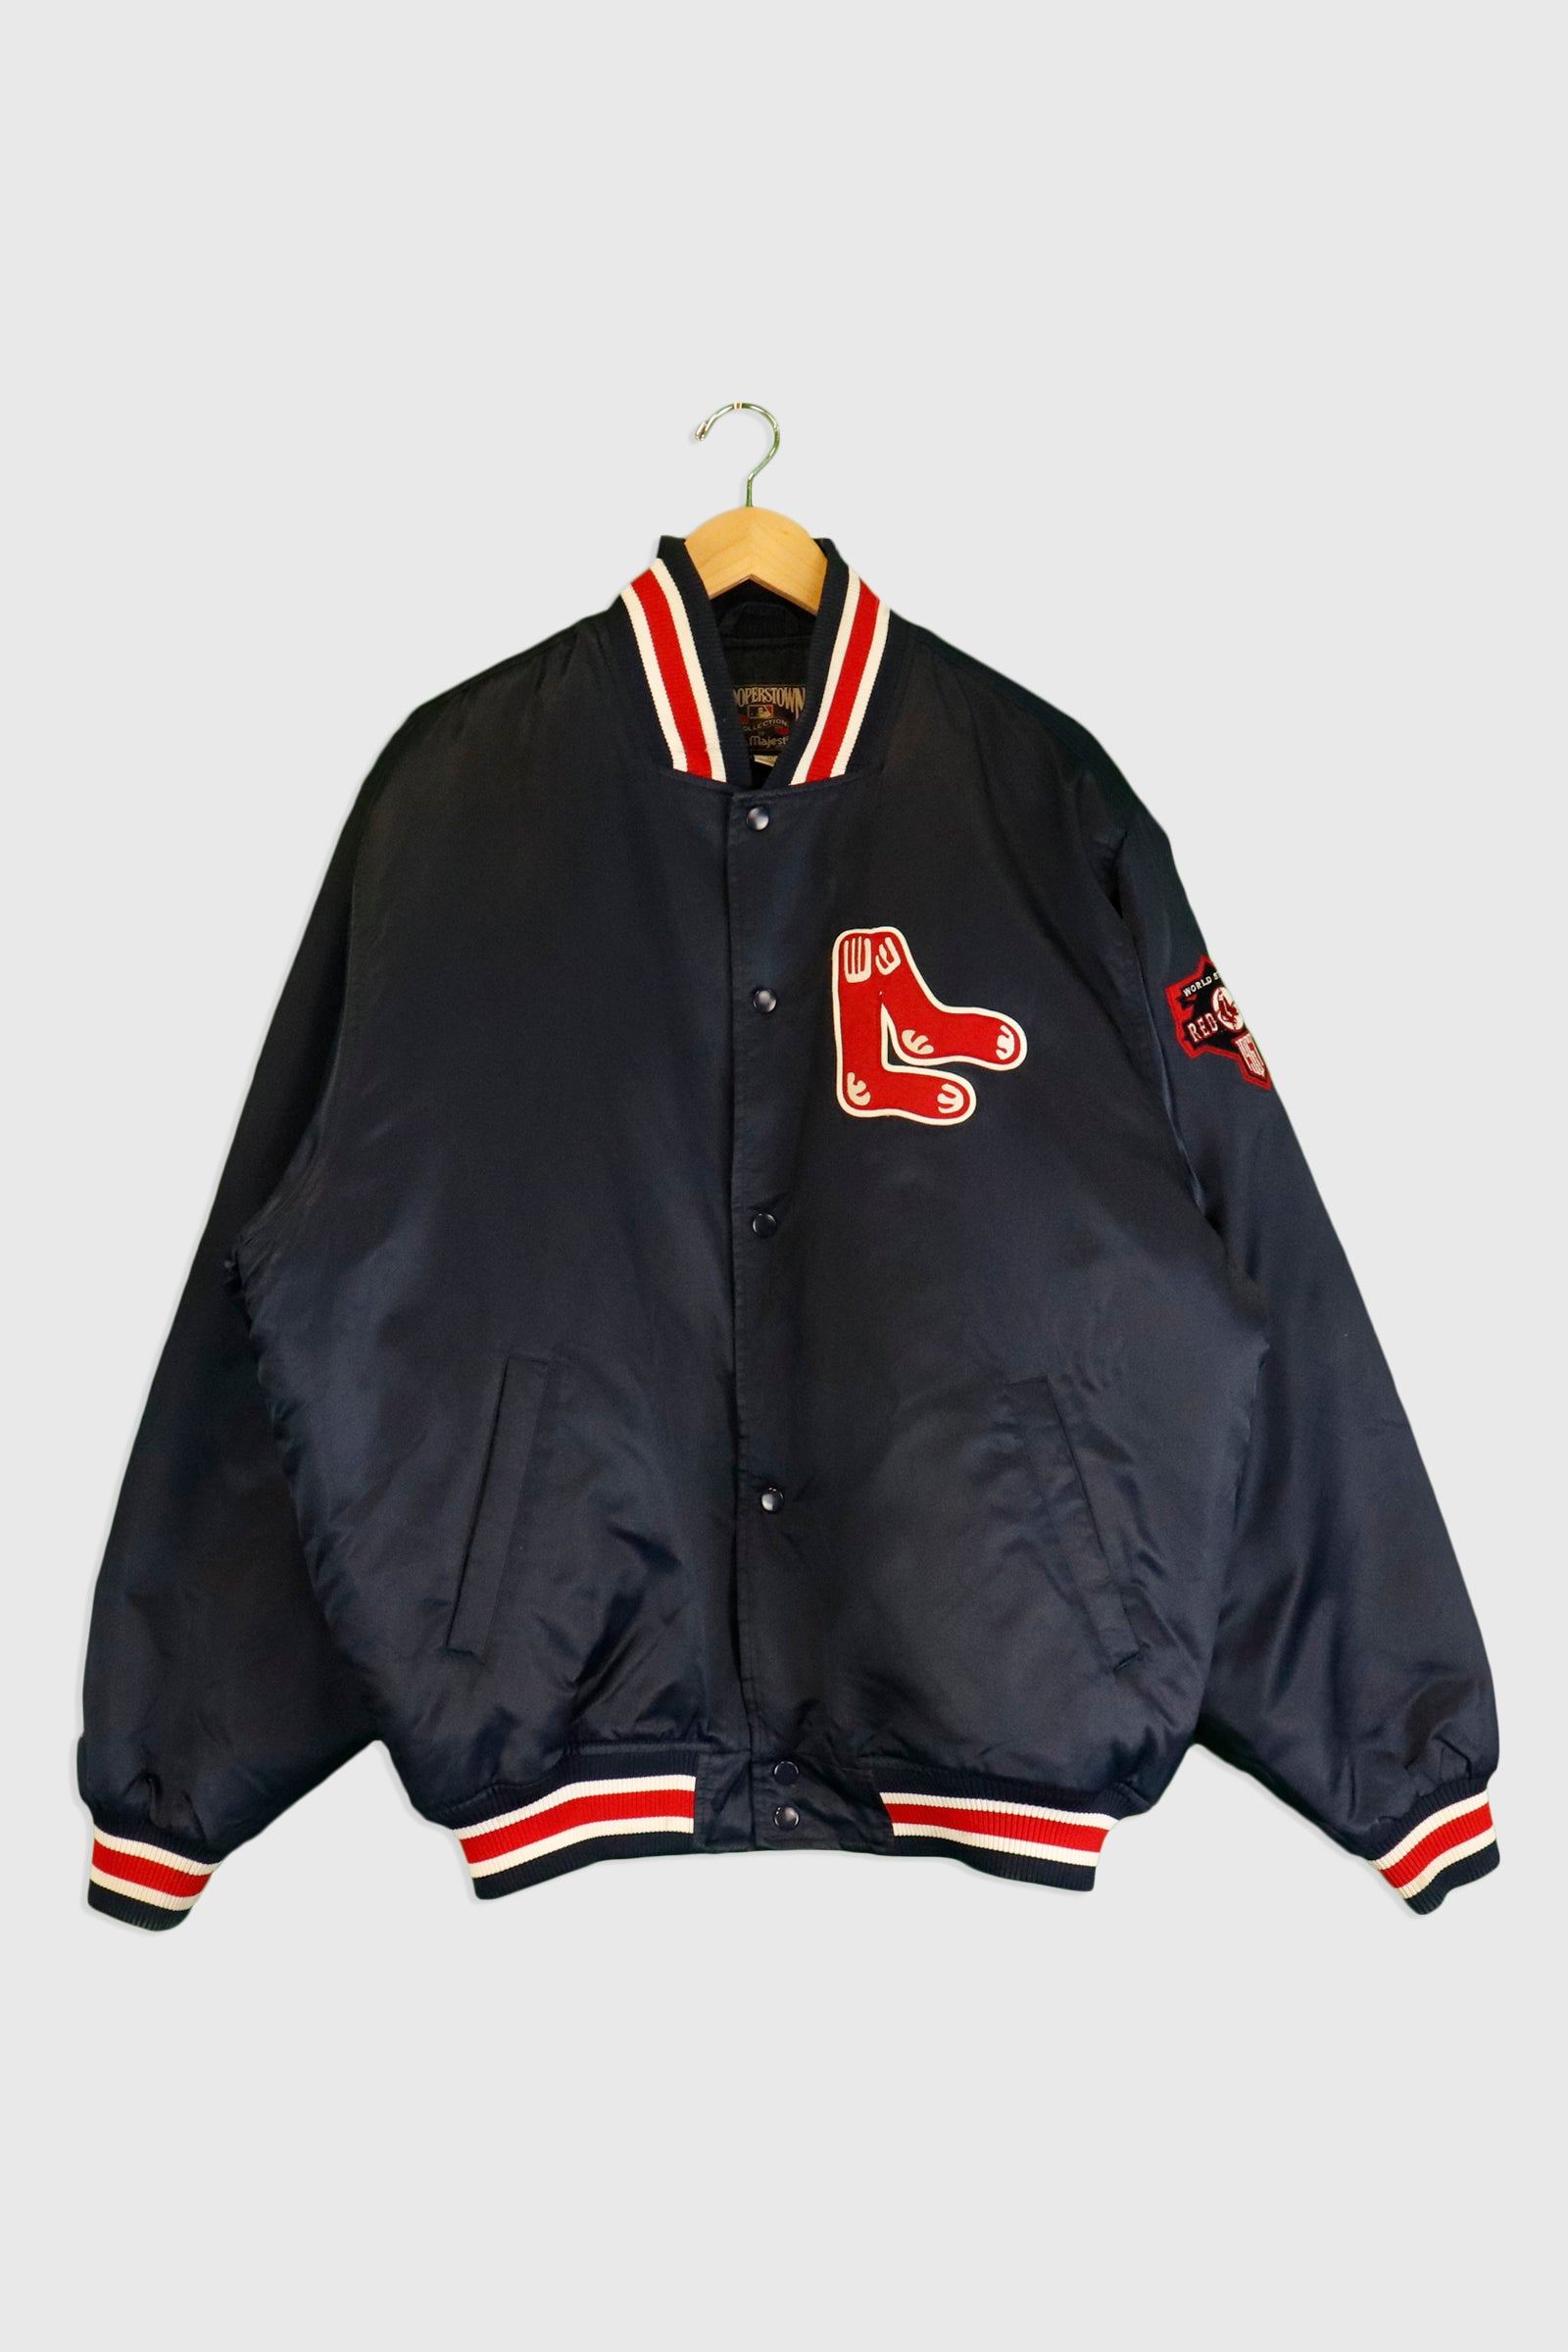 Vintage Nautica Cotton Zip Up Jacket Sz XL – F As In Frank Vintage